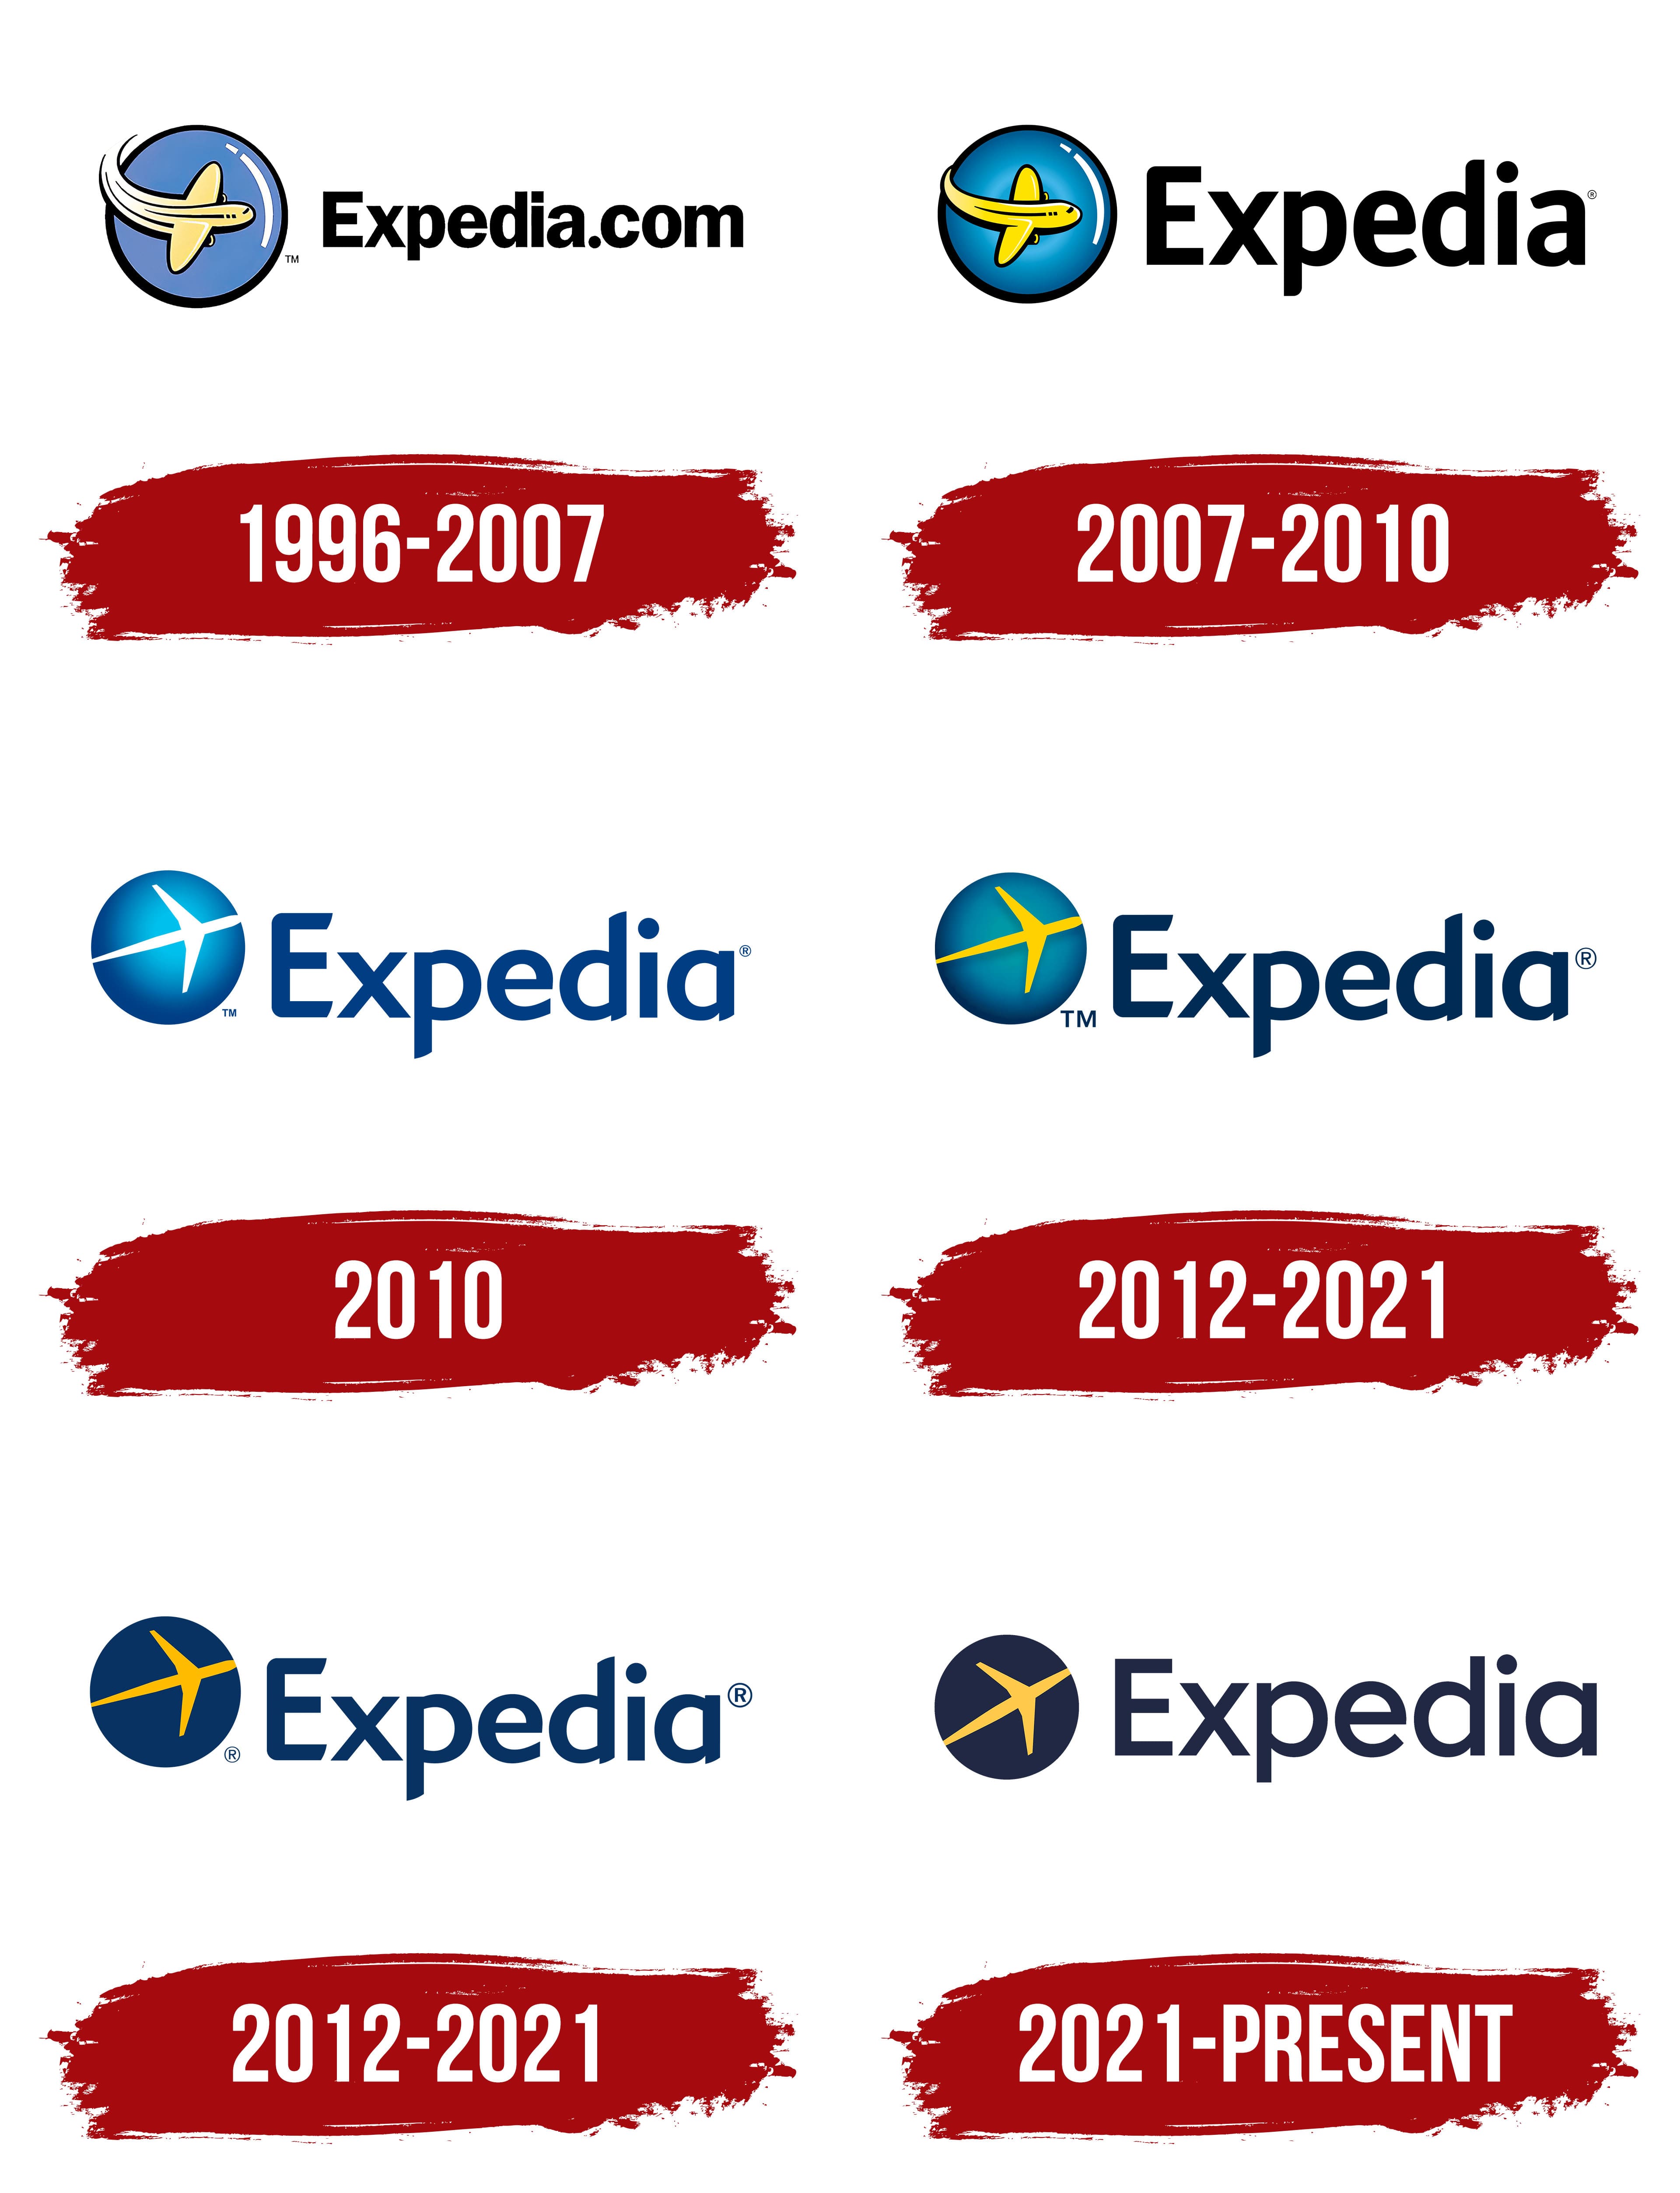 Expedia ‎Expedia: Hotels,